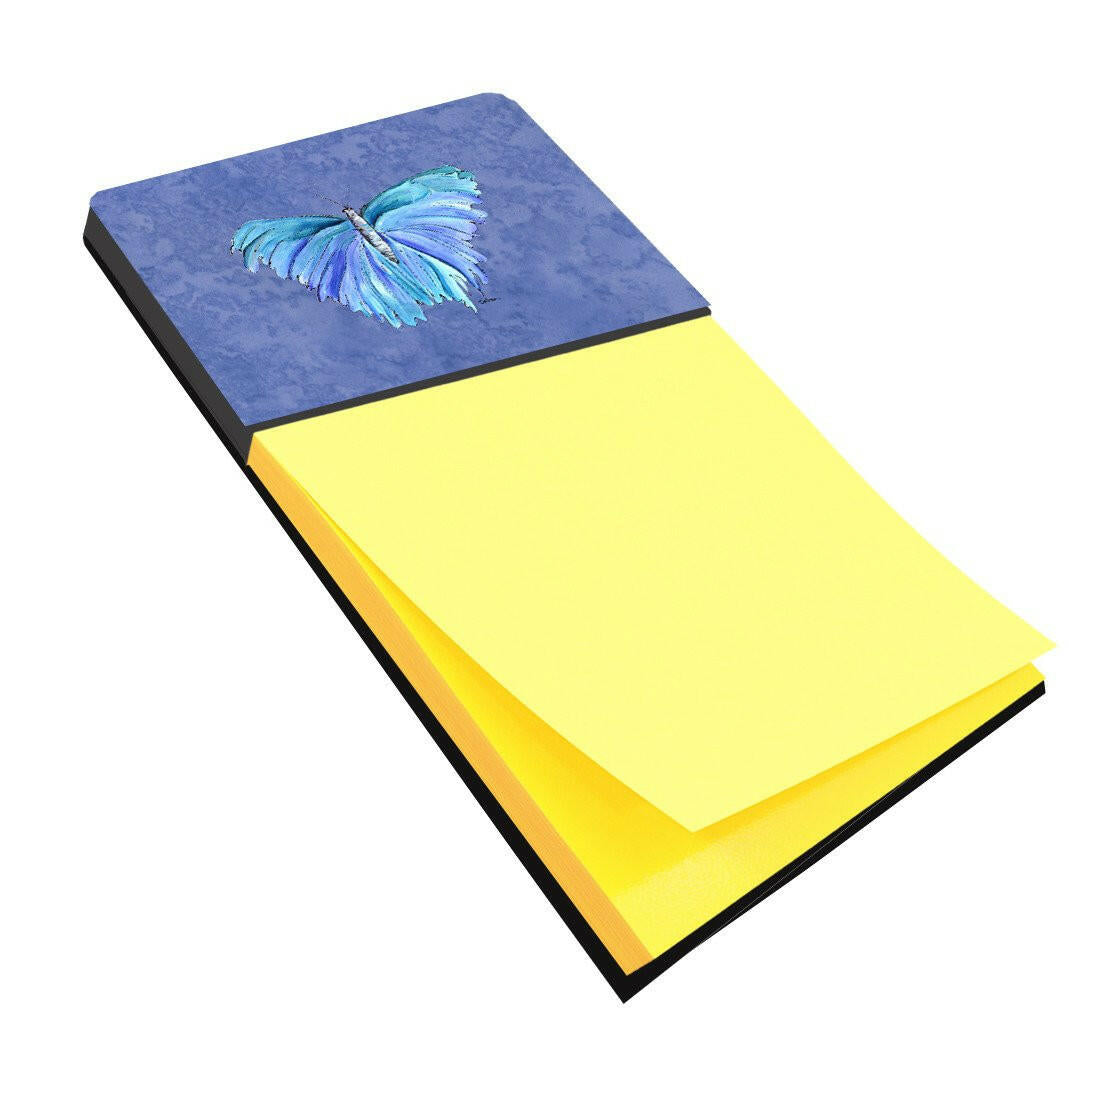 Butterfly on Slate Blue Refiillable Sticky Note Holder or Postit Note Dispenser 8855SN by Caroline's Treasures